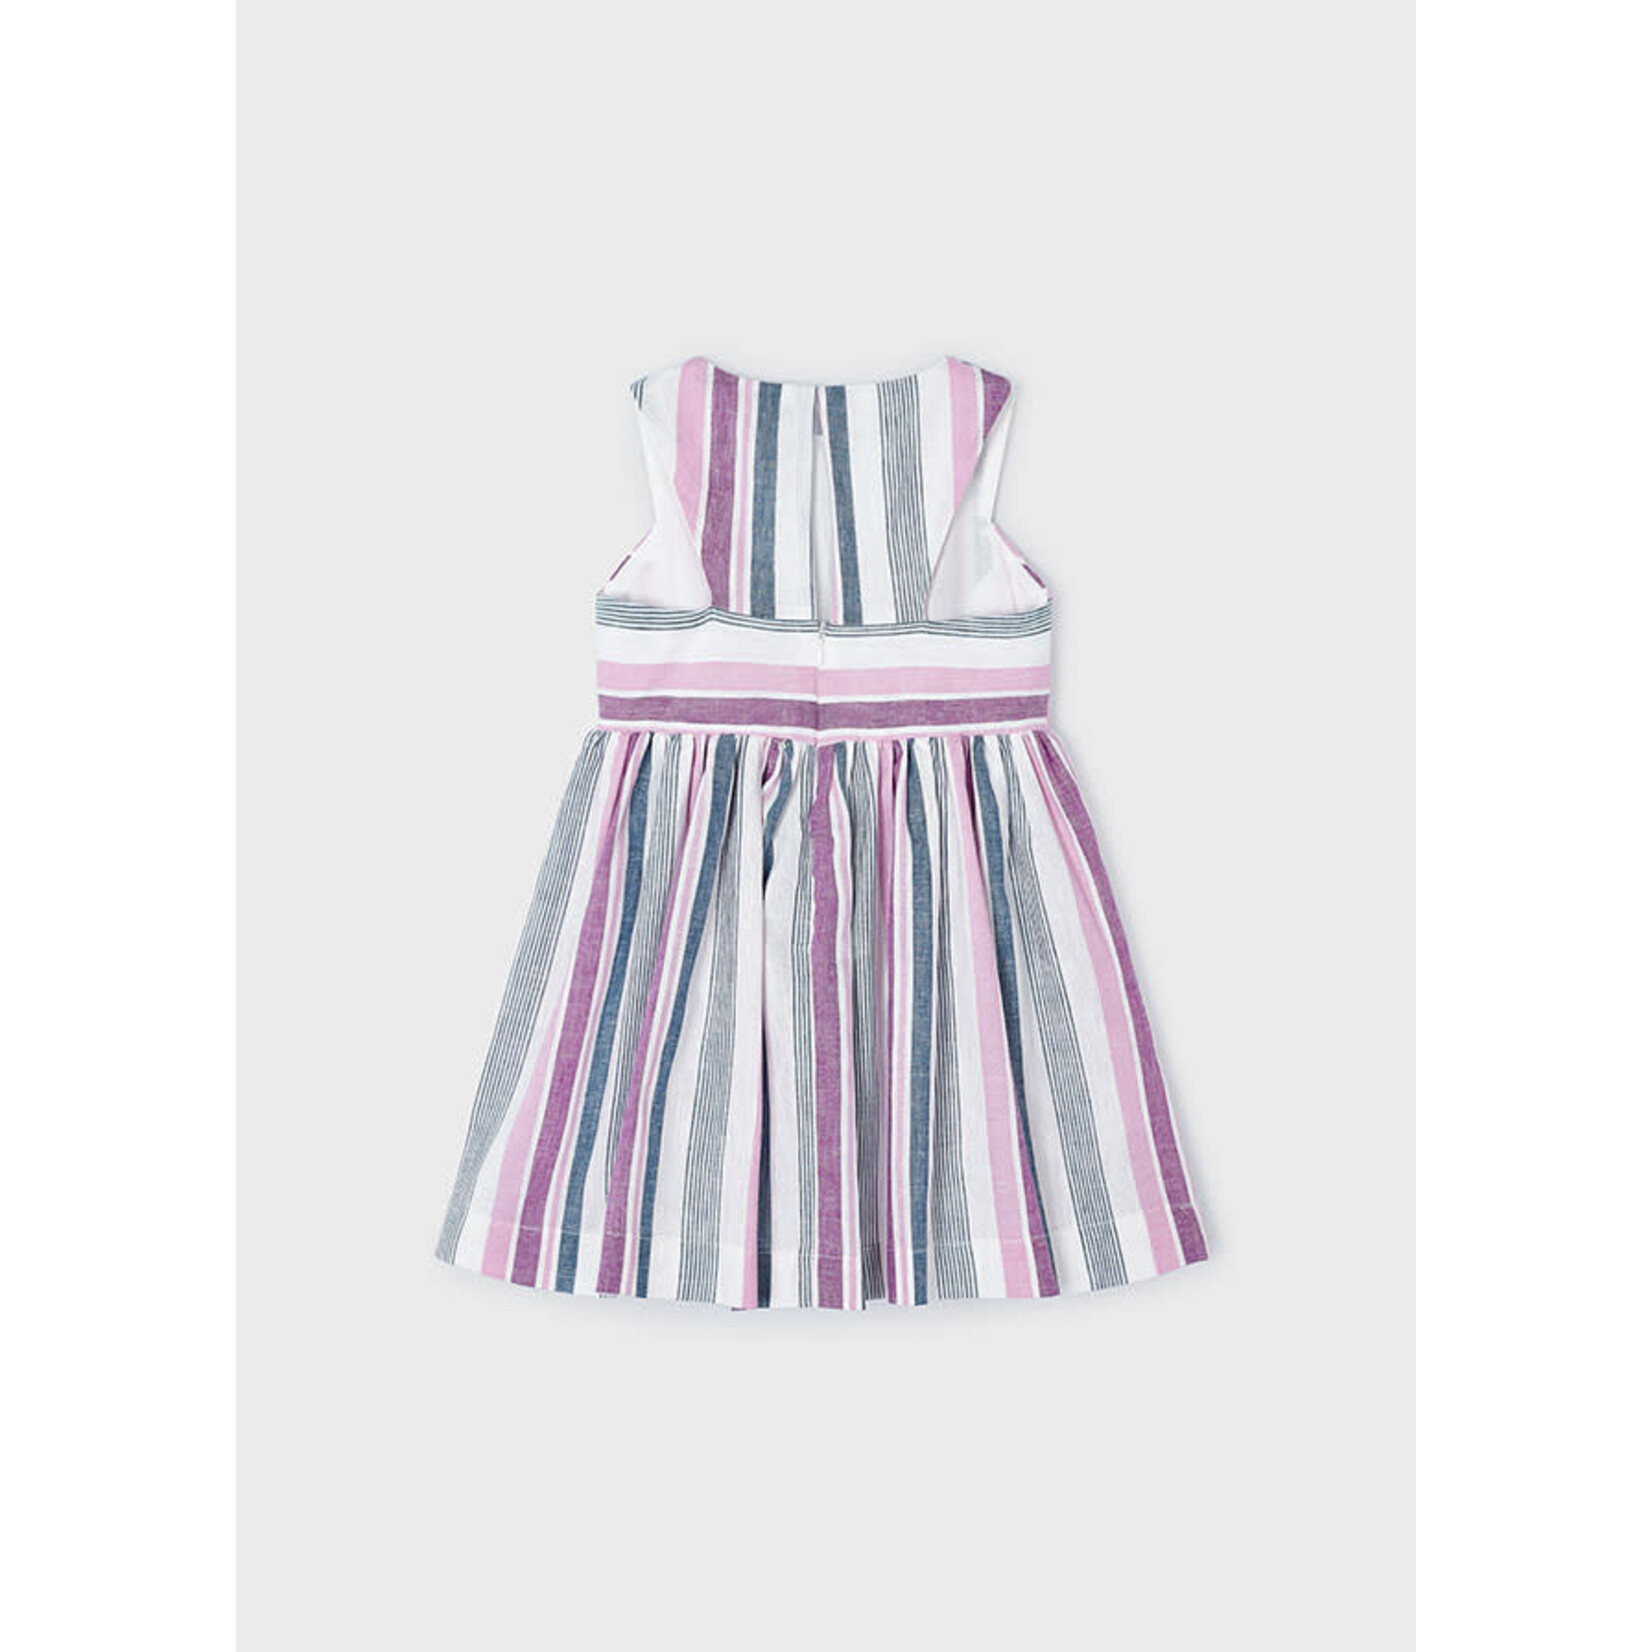 BATELA Stripe Dress